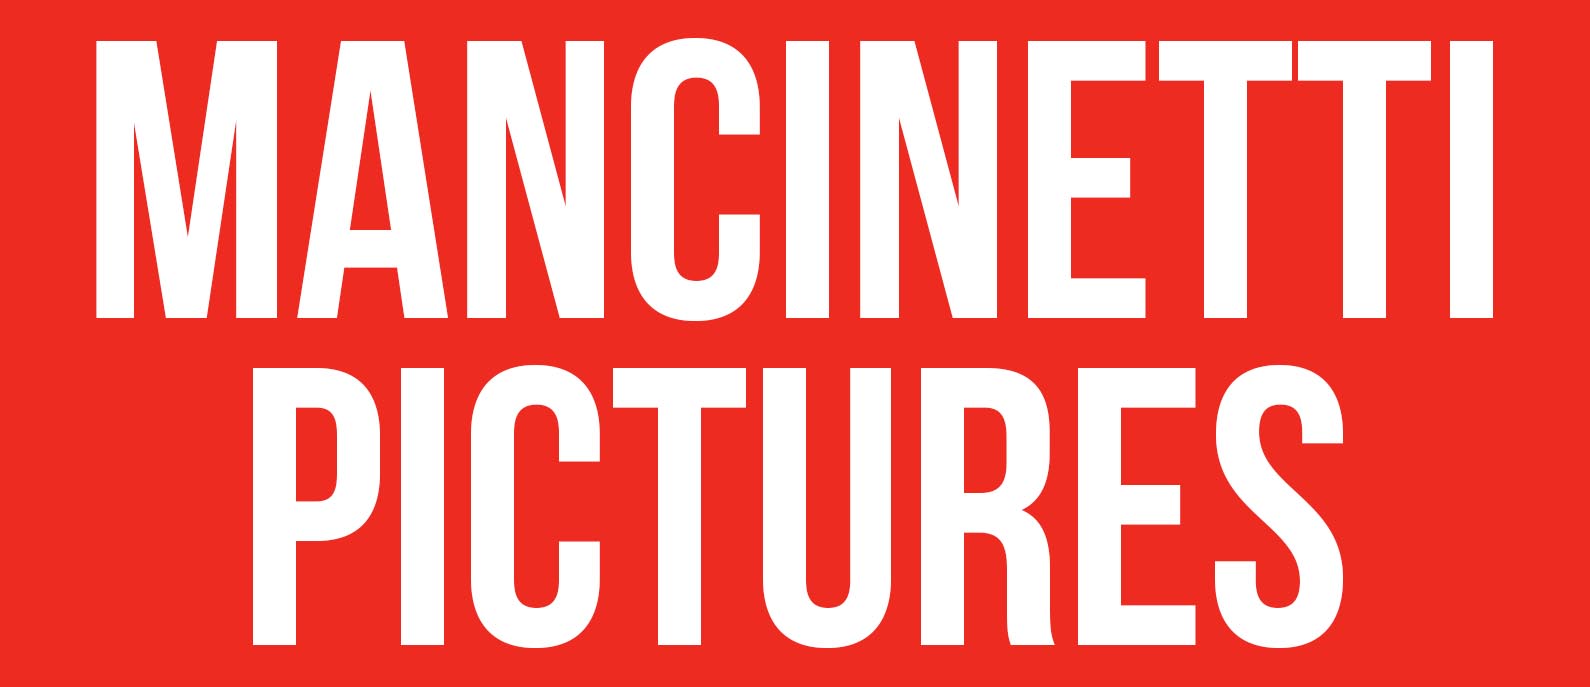 Mancinetti Pictures logo